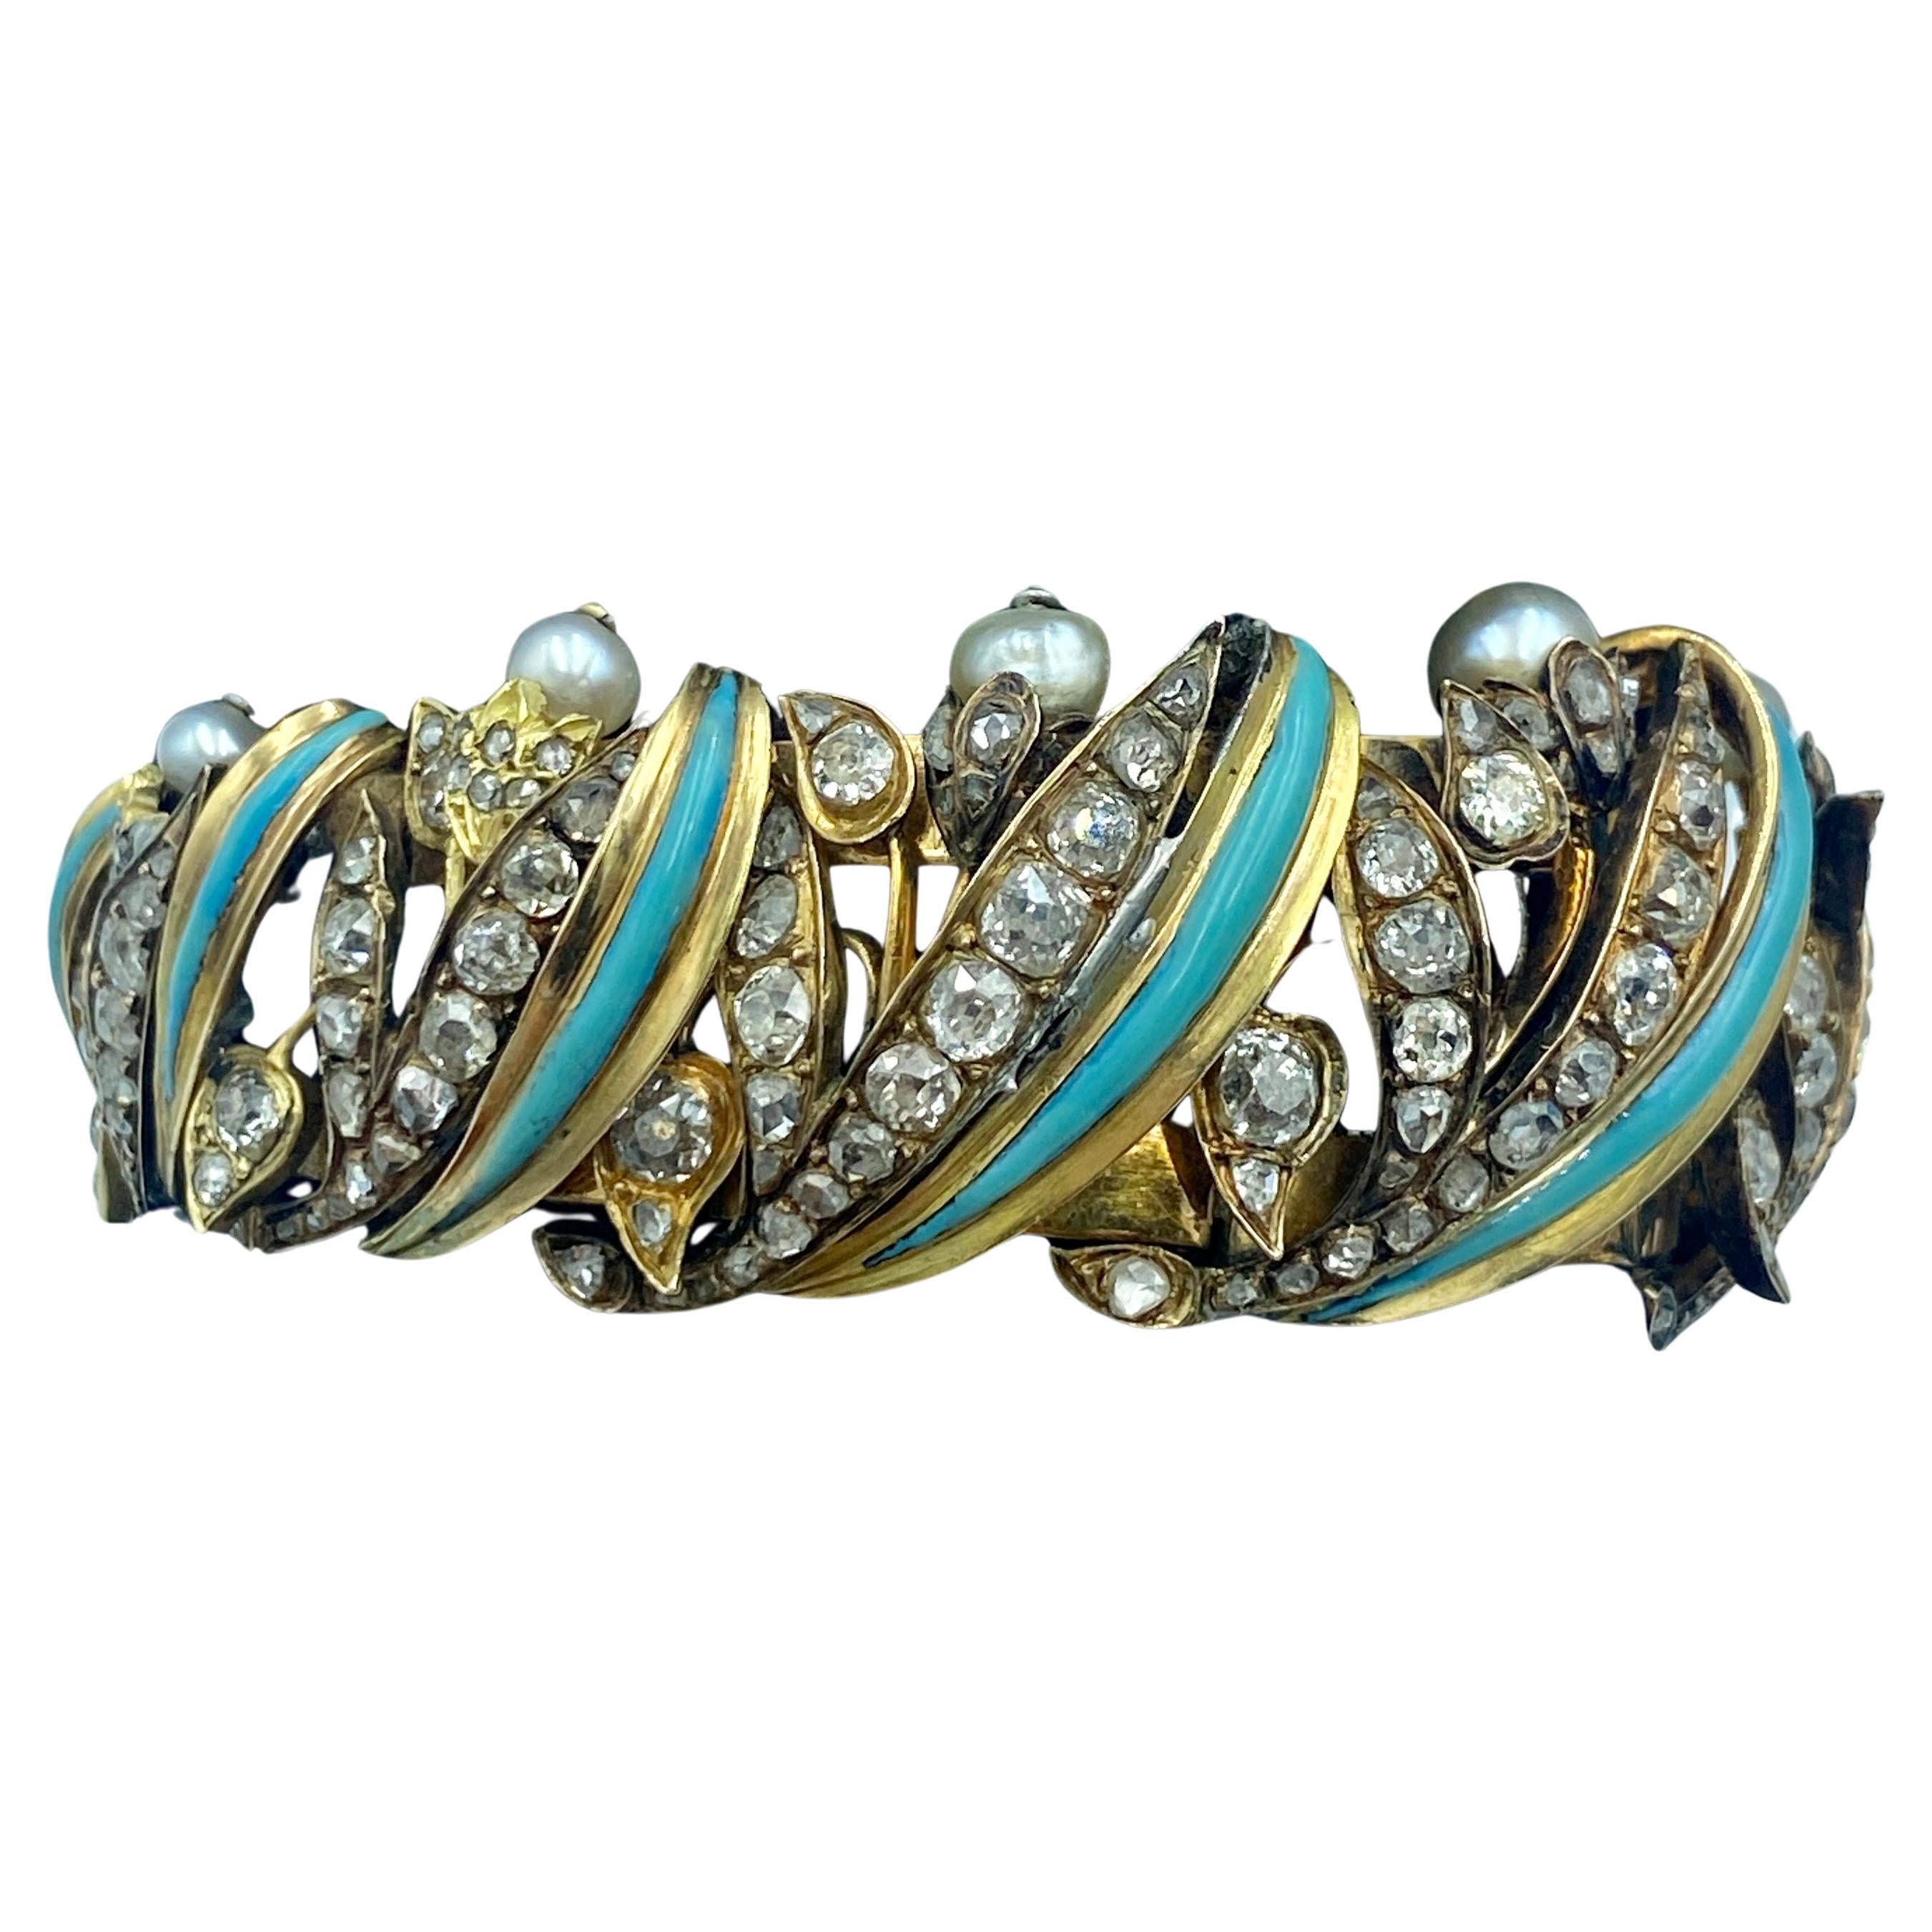 1820 European 18k gold, turquoise, old mine cut diamond & natural pearl bracelet